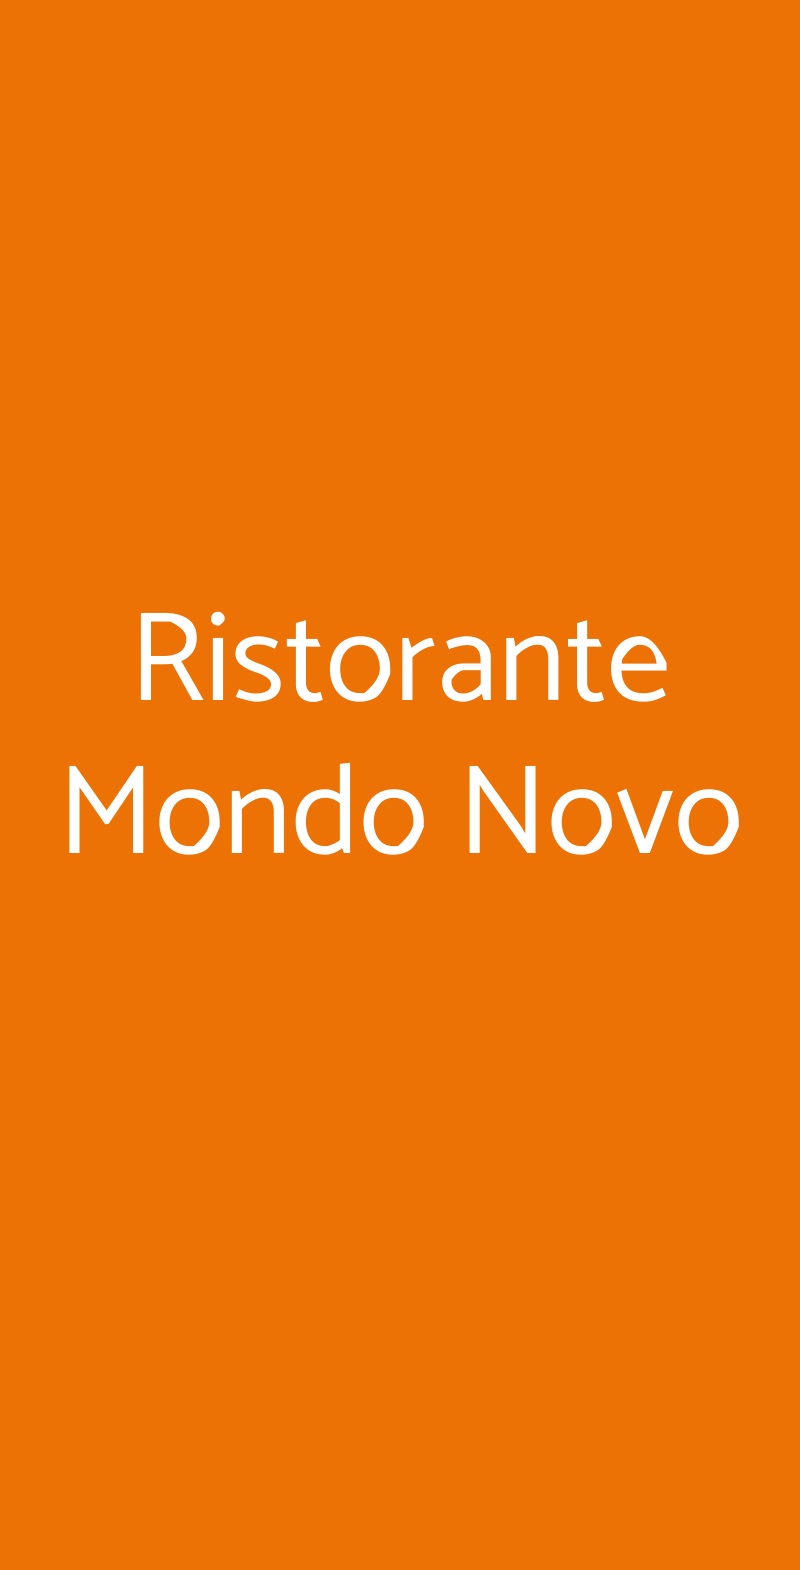 Ristorante Mondo Novo Venezia menù 1 pagina